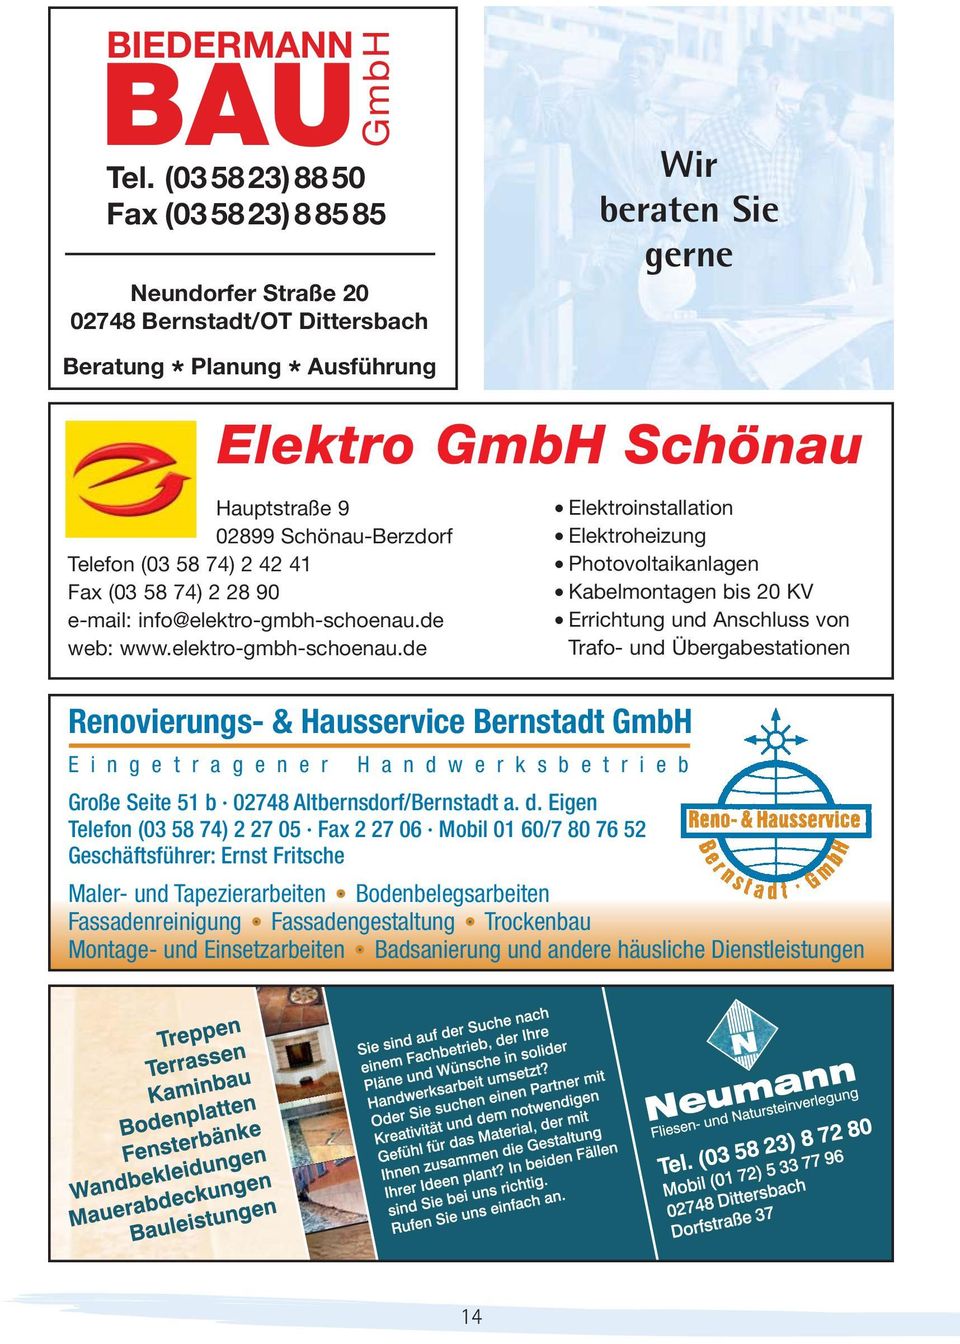 Schönau-Berzdorf Telefon (03 58 74) 2 42 41 Fax (03 58 74) 2 28 90 e-mail: info@elektro-gmbh-schoenau.